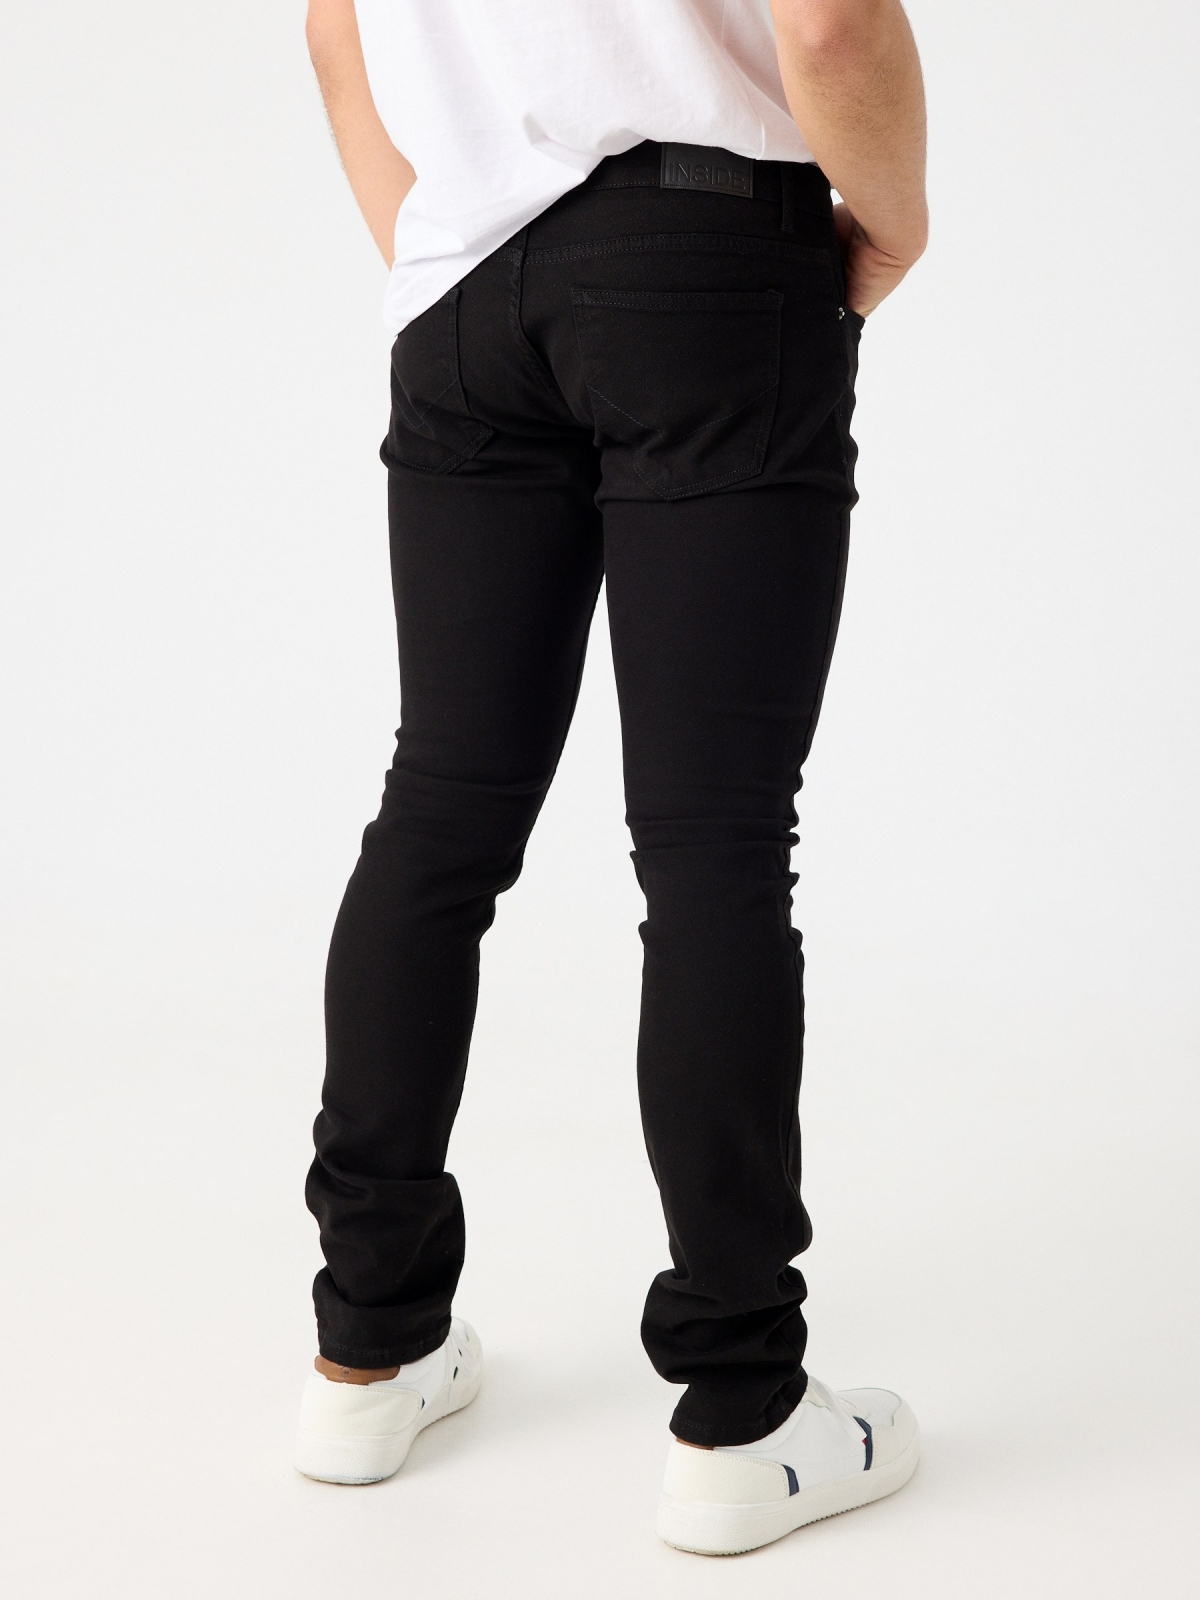 Jeans básico de cinco bolsos preto vista meia traseira